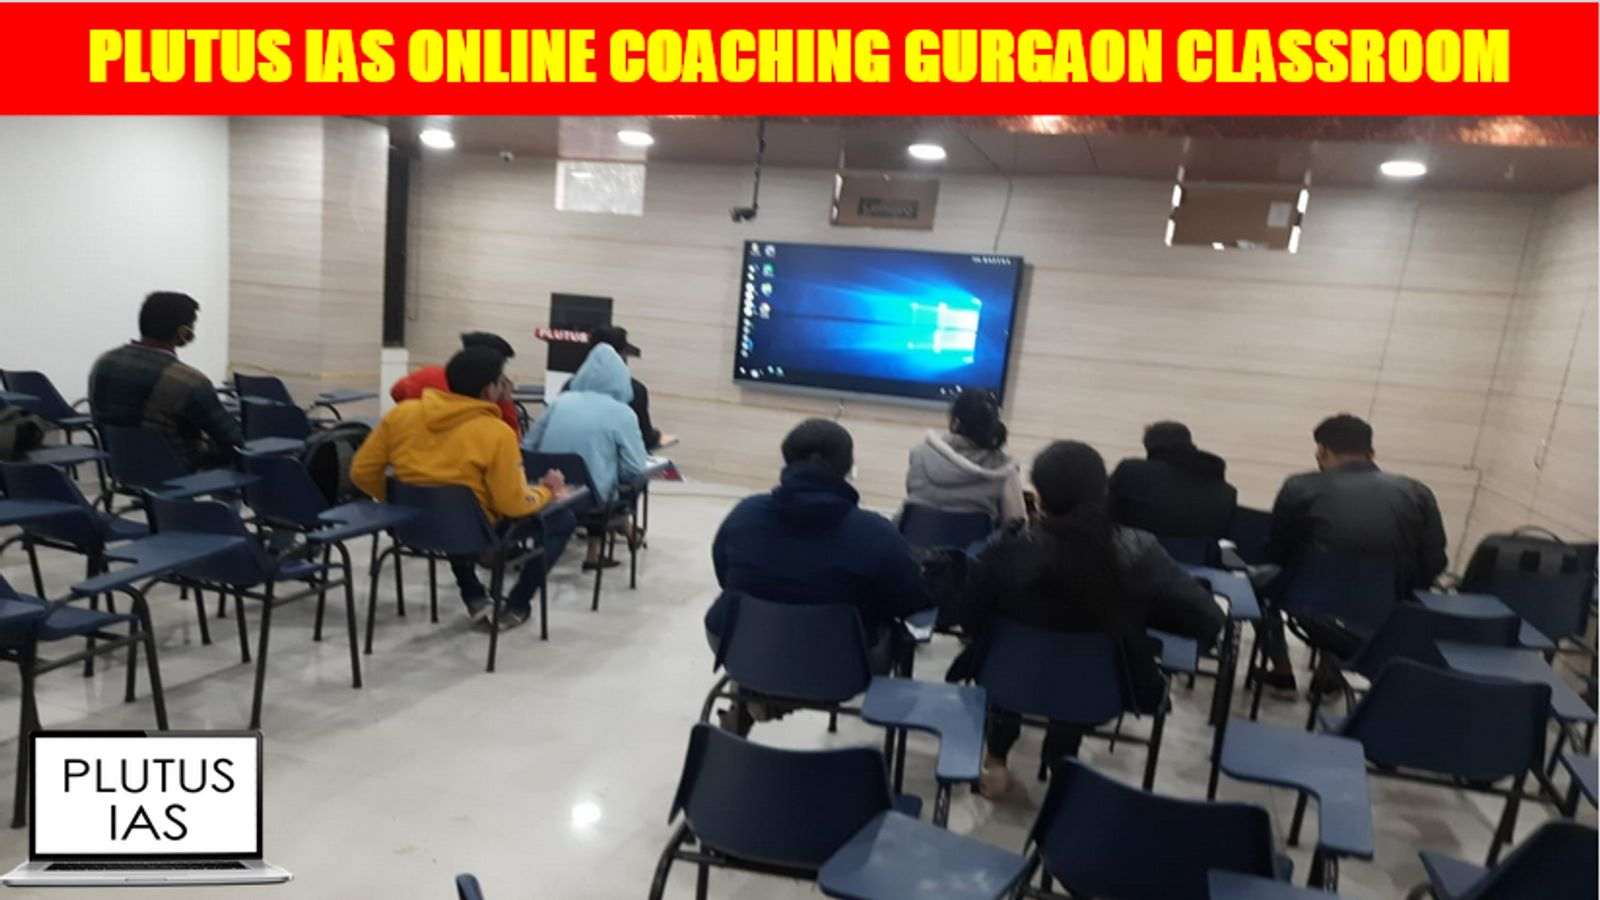 Plutus IAS Online Coaching Gurgaon Class Room